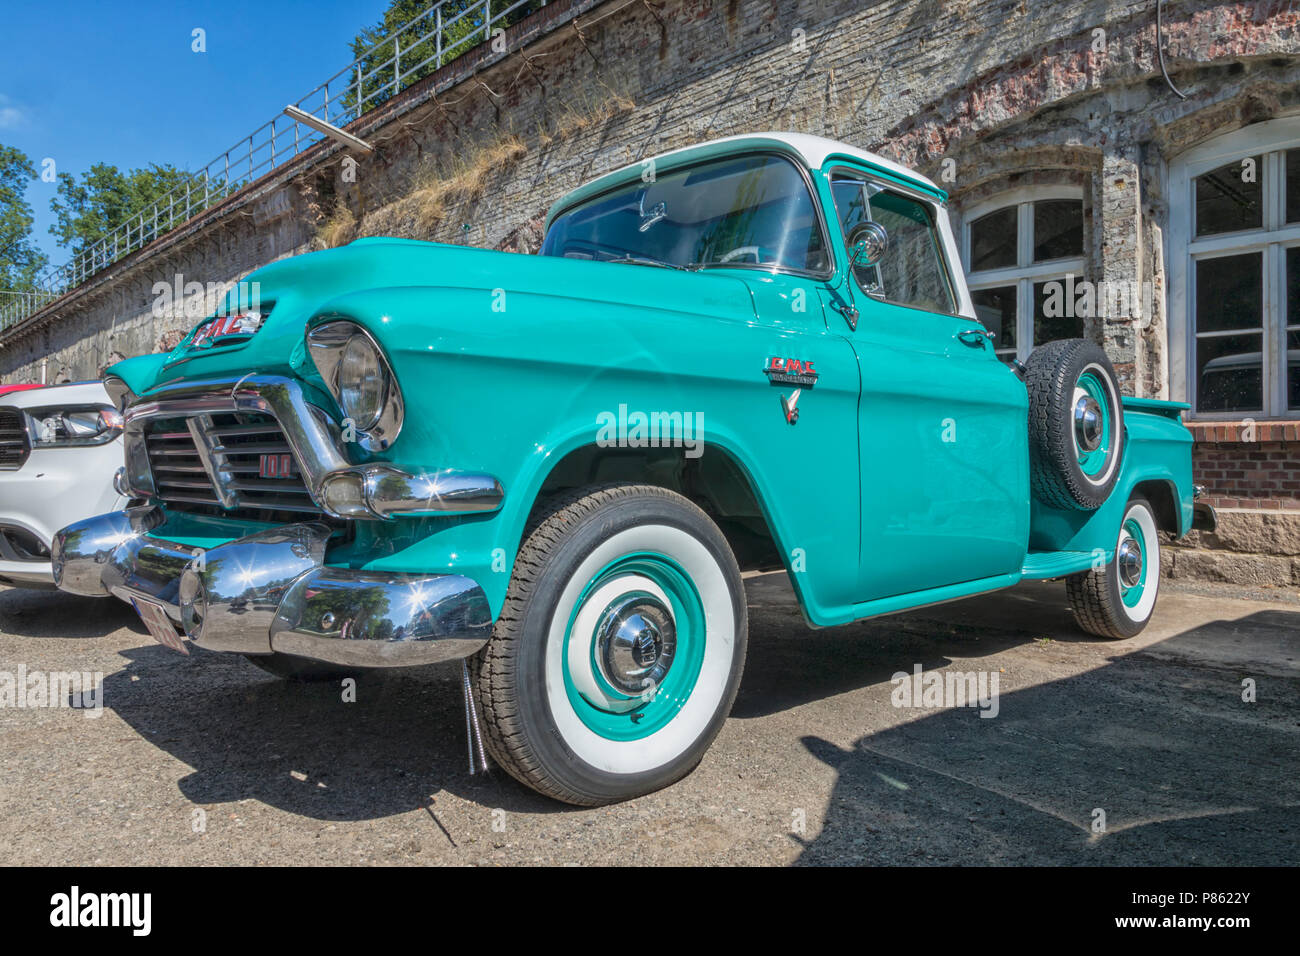 Stade, Germania - Luglio 8, 2018: UN 1957 vintage 100 GMC pickup truck al quinto periodo estivo ci guida car meeting. Foto Stock